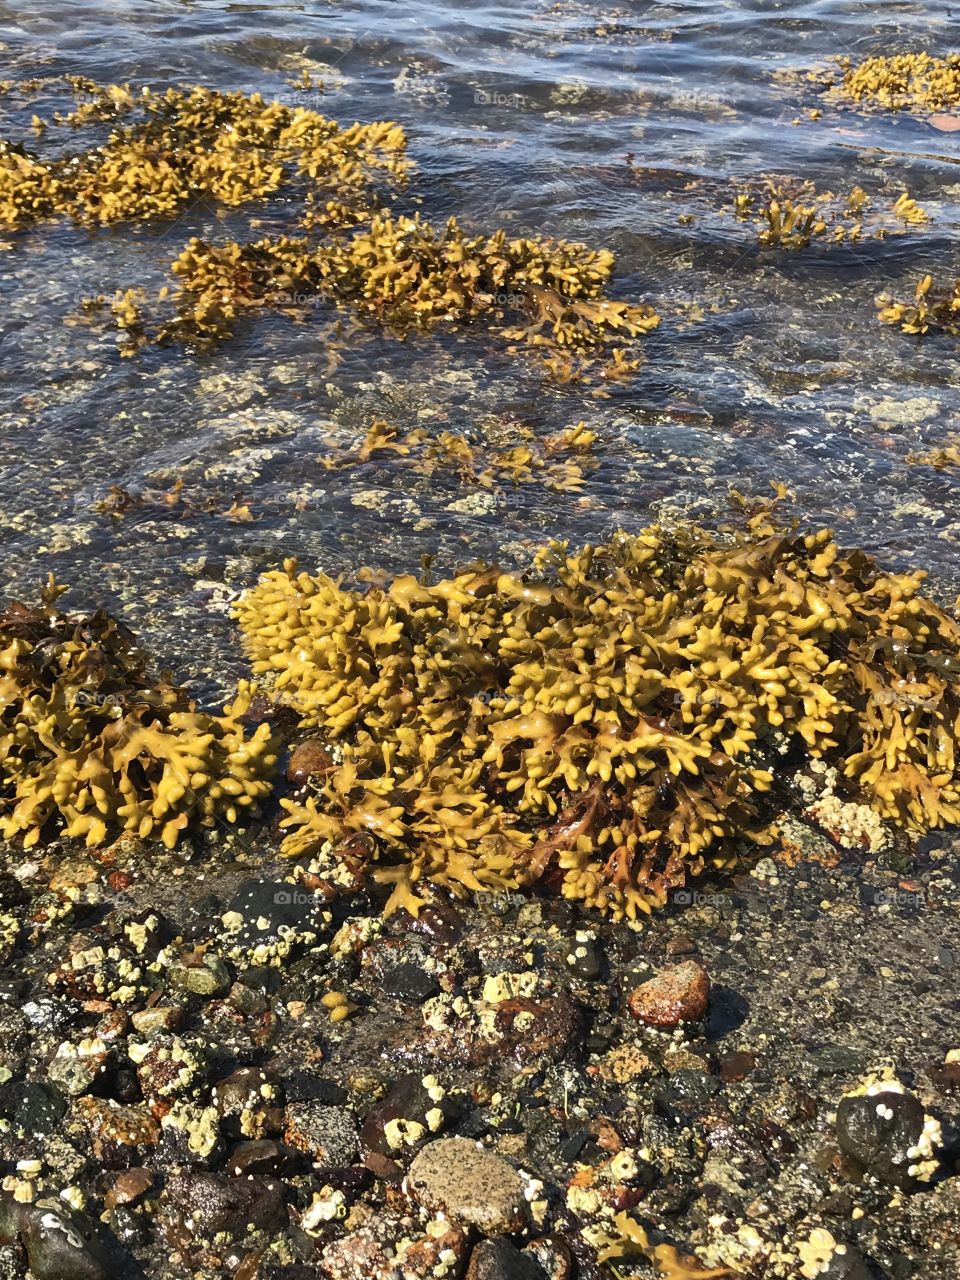 West coast kelp bed